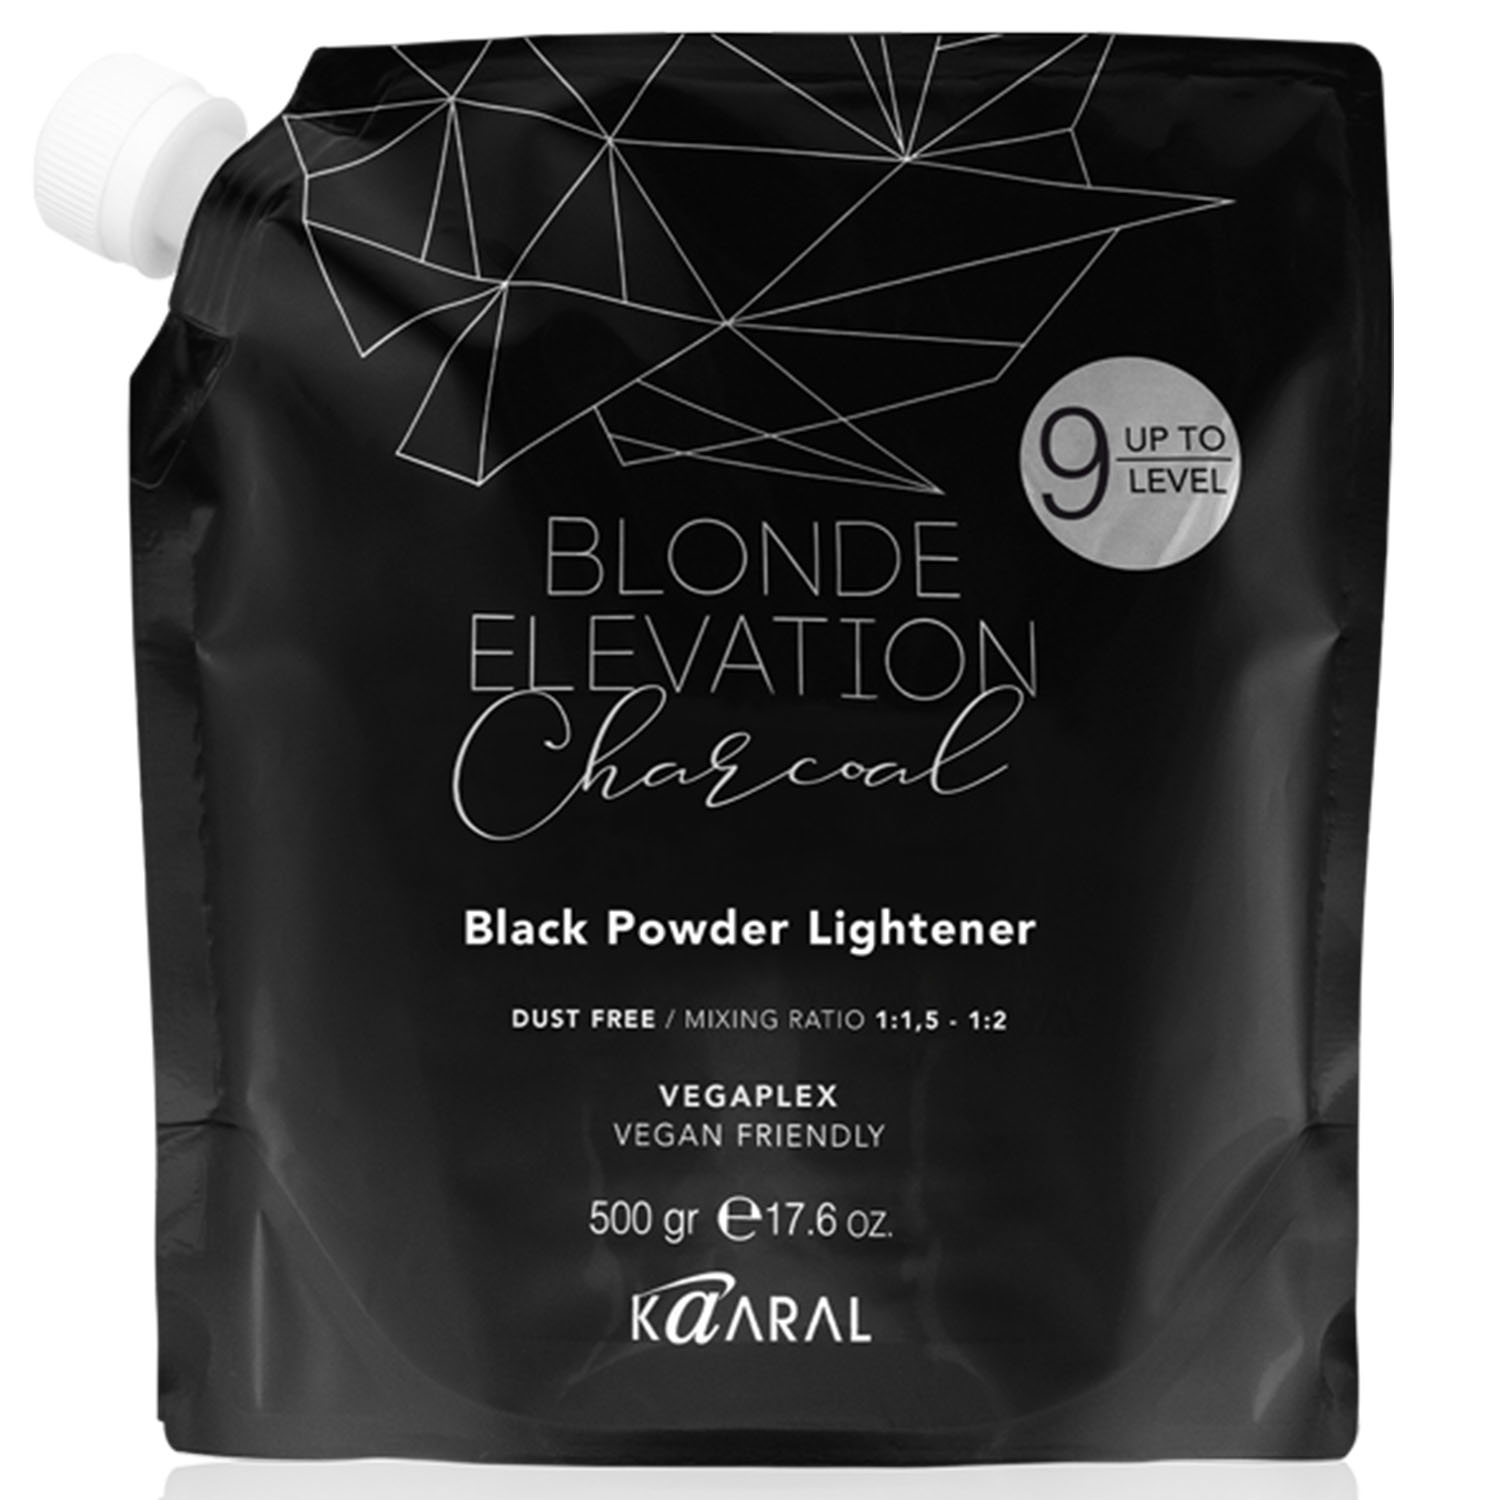 Kaaral Черная обесцвечивающая пудра Black Powder Lightener, 500 г (Kaaral, Blonde Elevation)